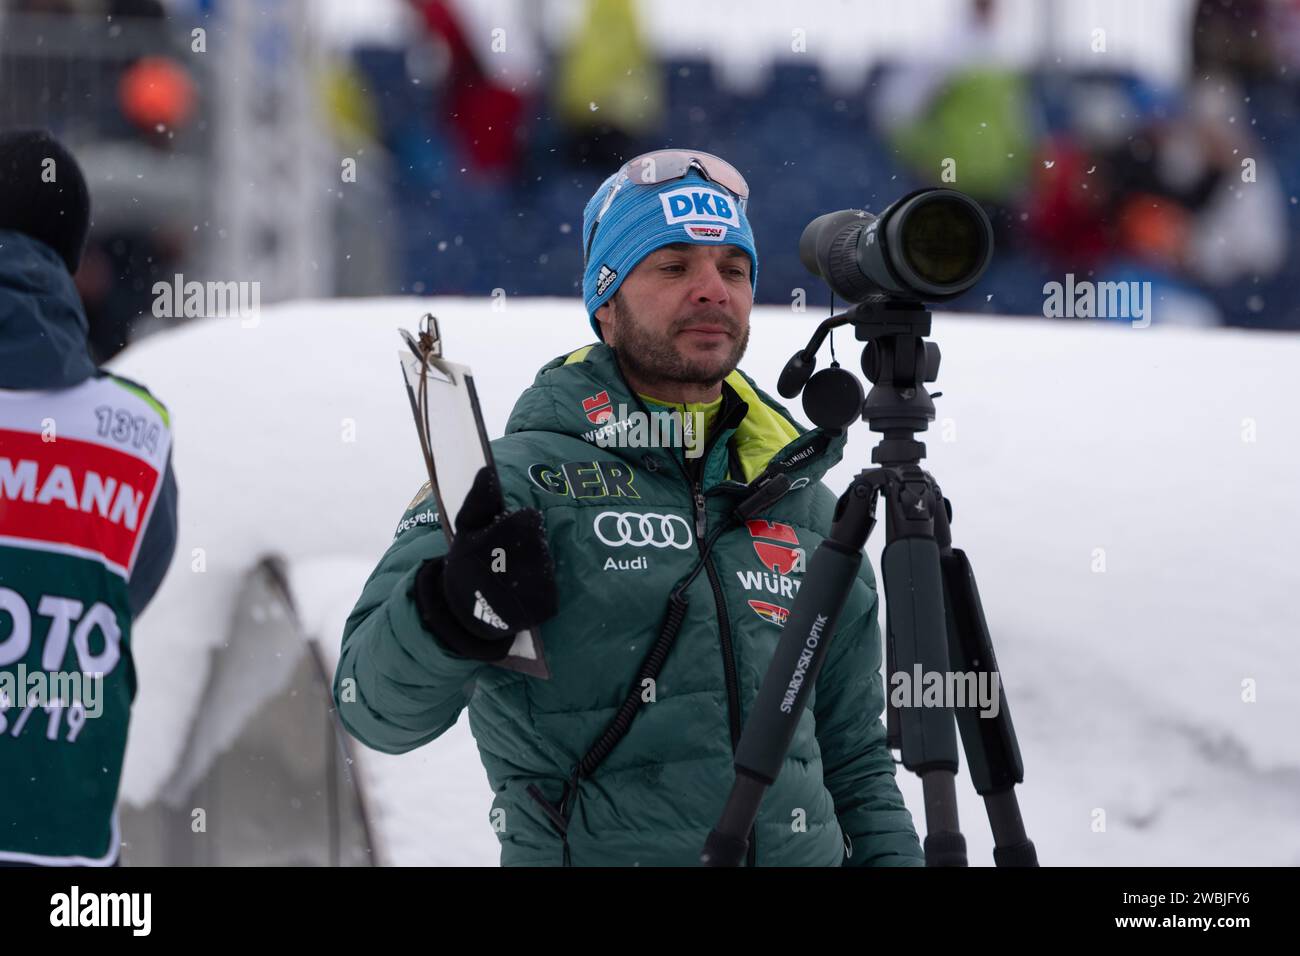 Biathlon Welt Cup 4 x 6 KM Staffel der Frauen à Hochfilzen, Österreich am 16.12.2018 Banque D'Images